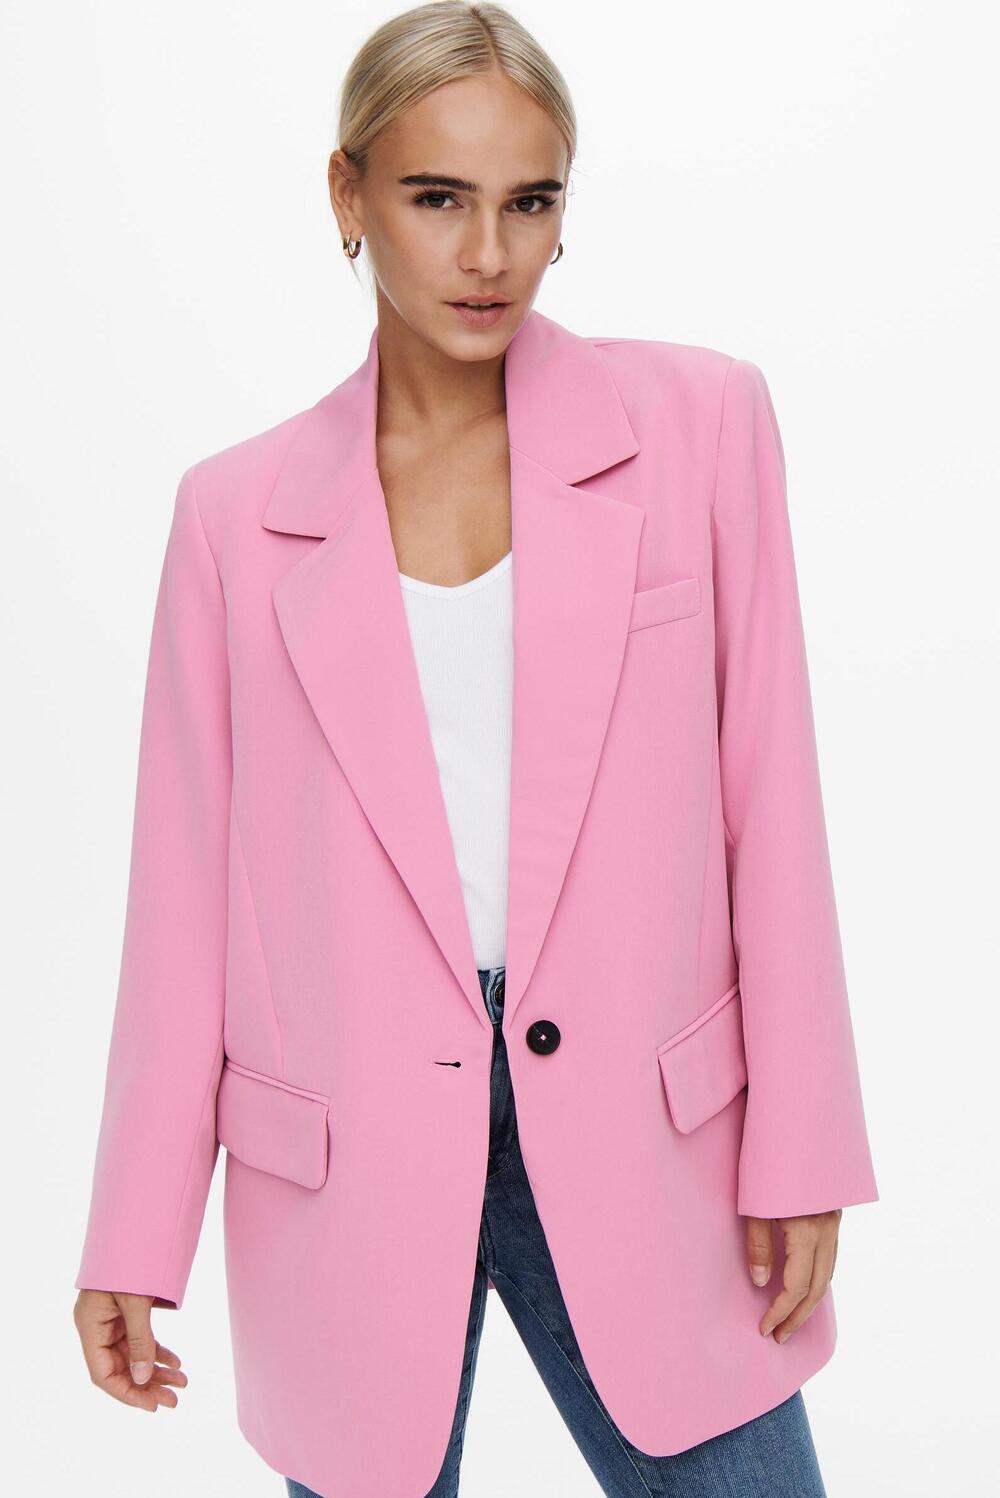 lexicon Vlak Guggenheim Museum onllana-berry l/s oversize blazer t 15245698 only blazer fuchsia pink